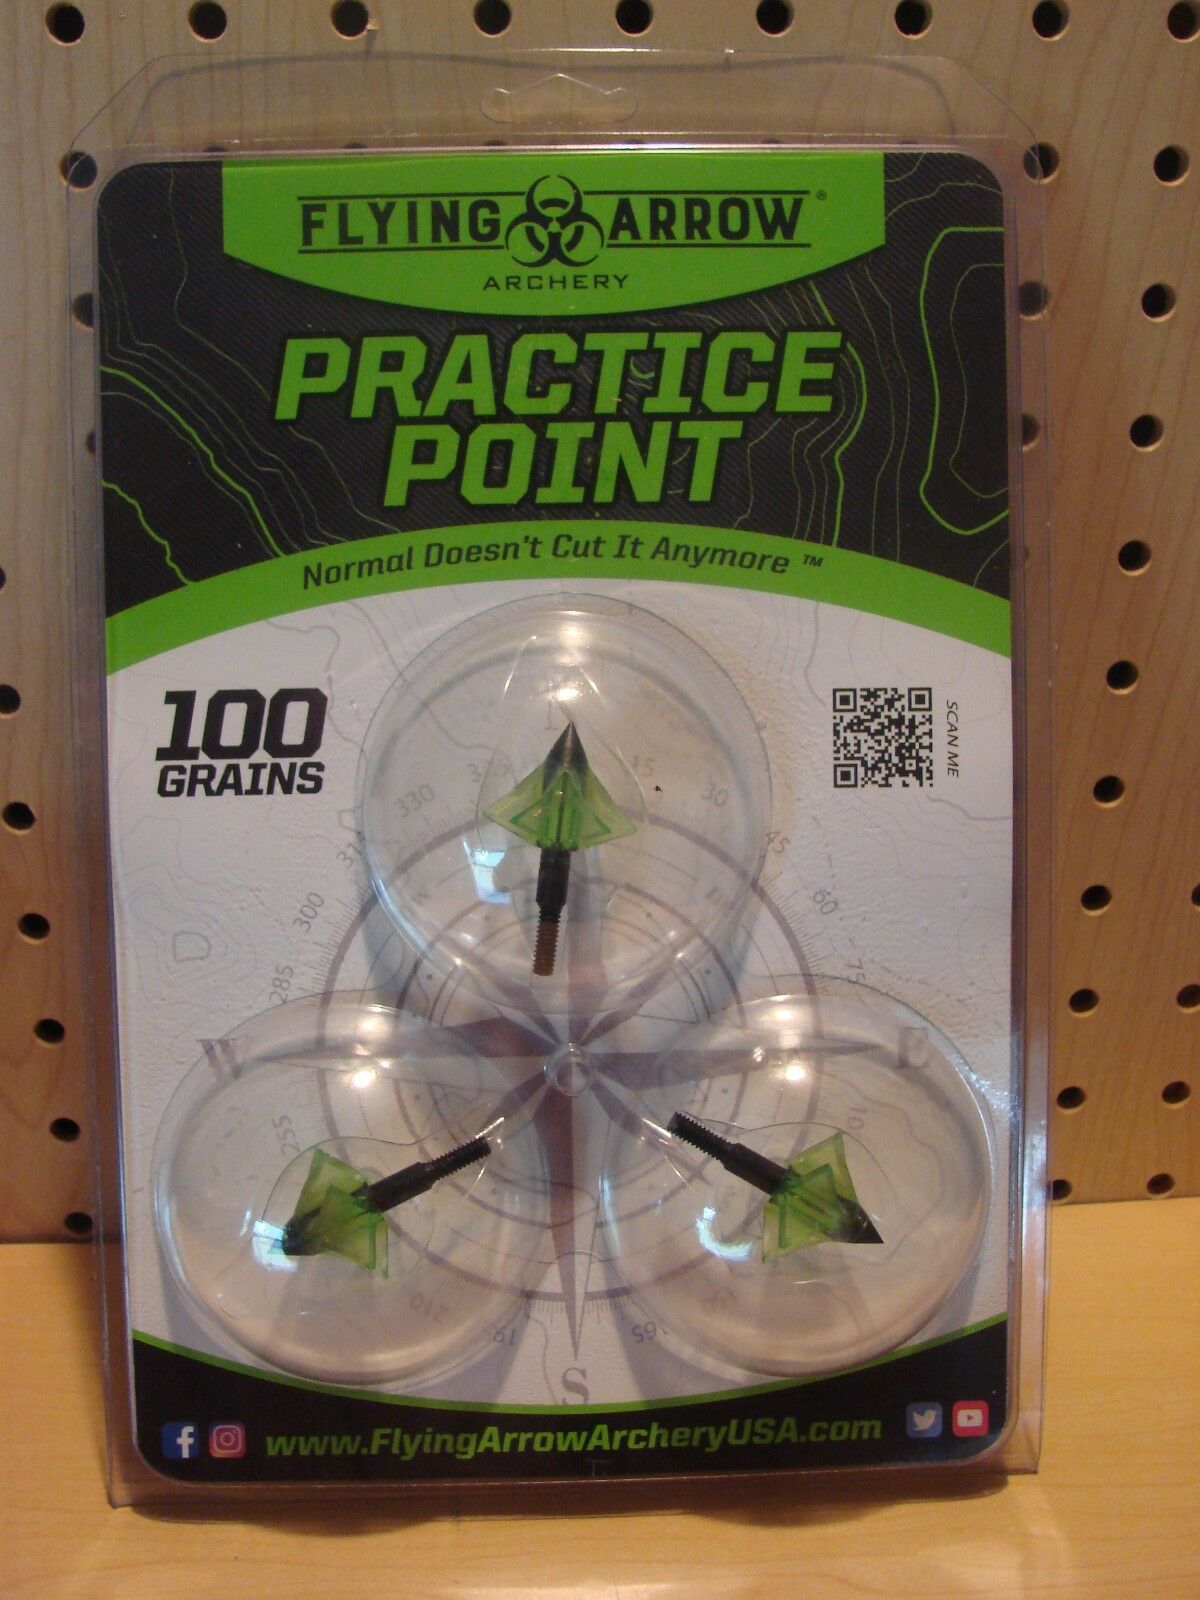 Flying Arrow Archery Toxic Practice Point Broadhead 100 Grain 3 Pack Pp-100 New